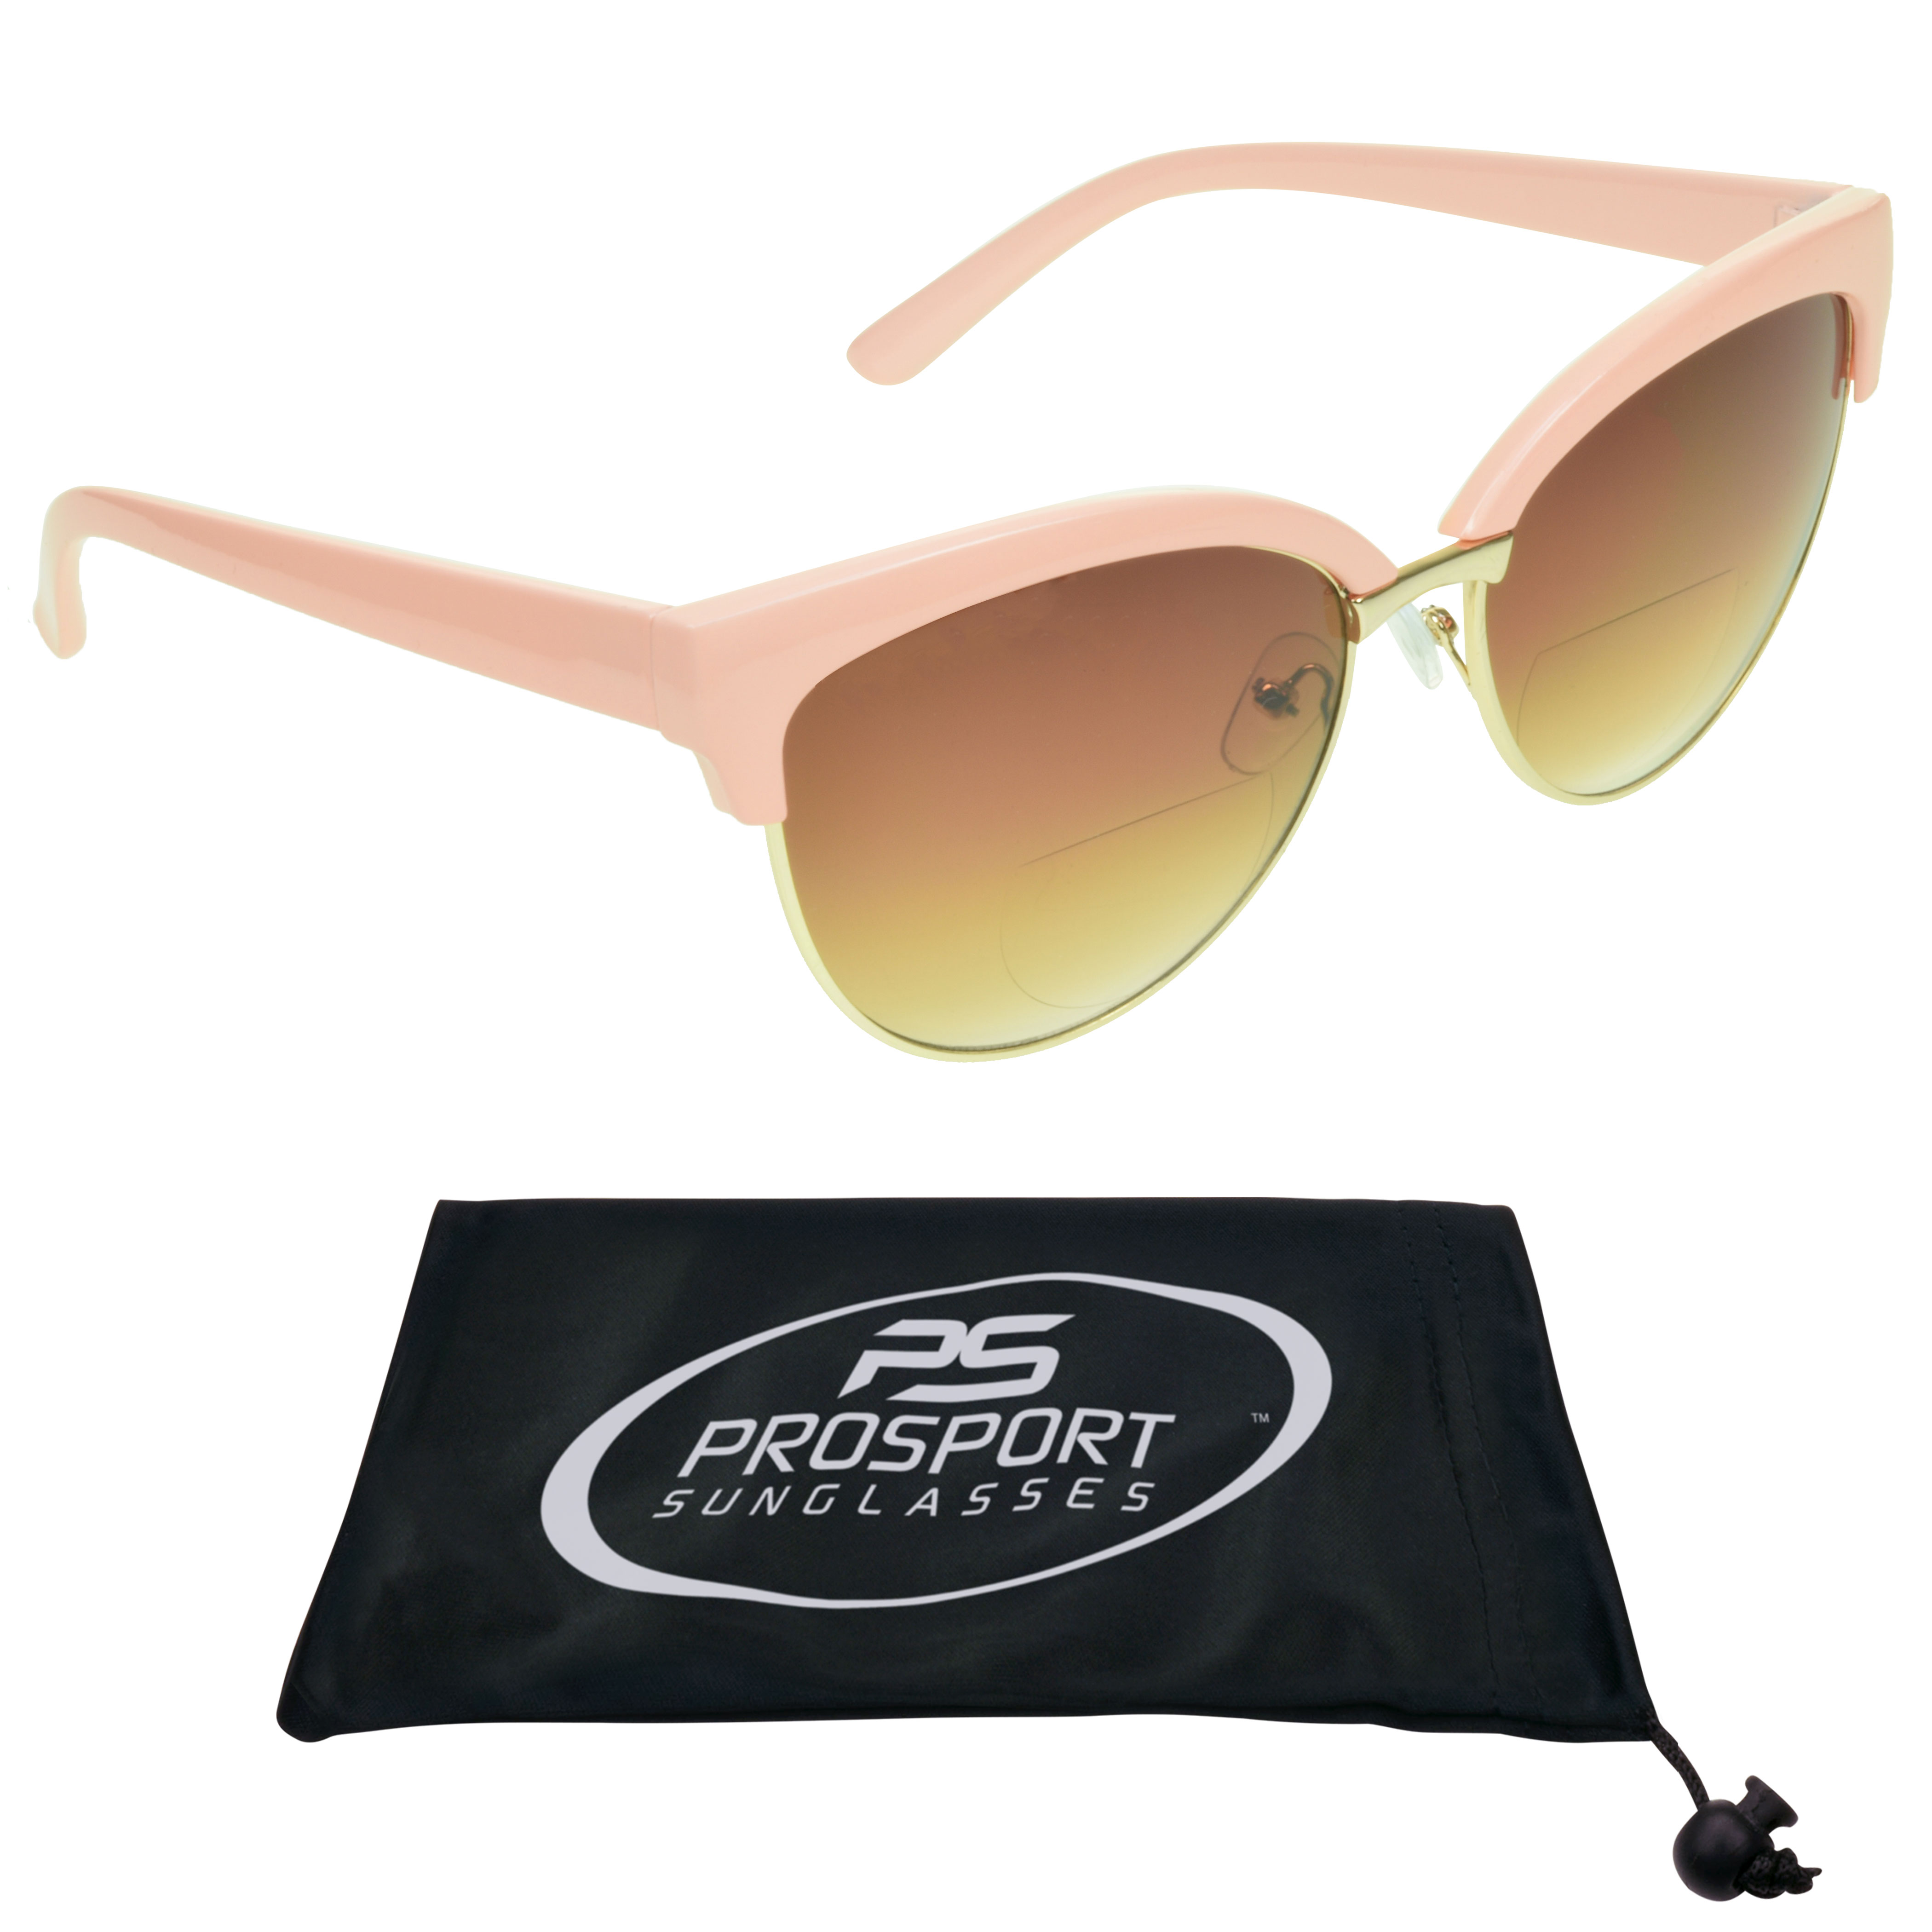 proSPORT Women Bifocal Reading Cateye Fashion Horn Rim Sunglasses Pink Gold Frame Brown Lens +3.00 - image 1 of 5